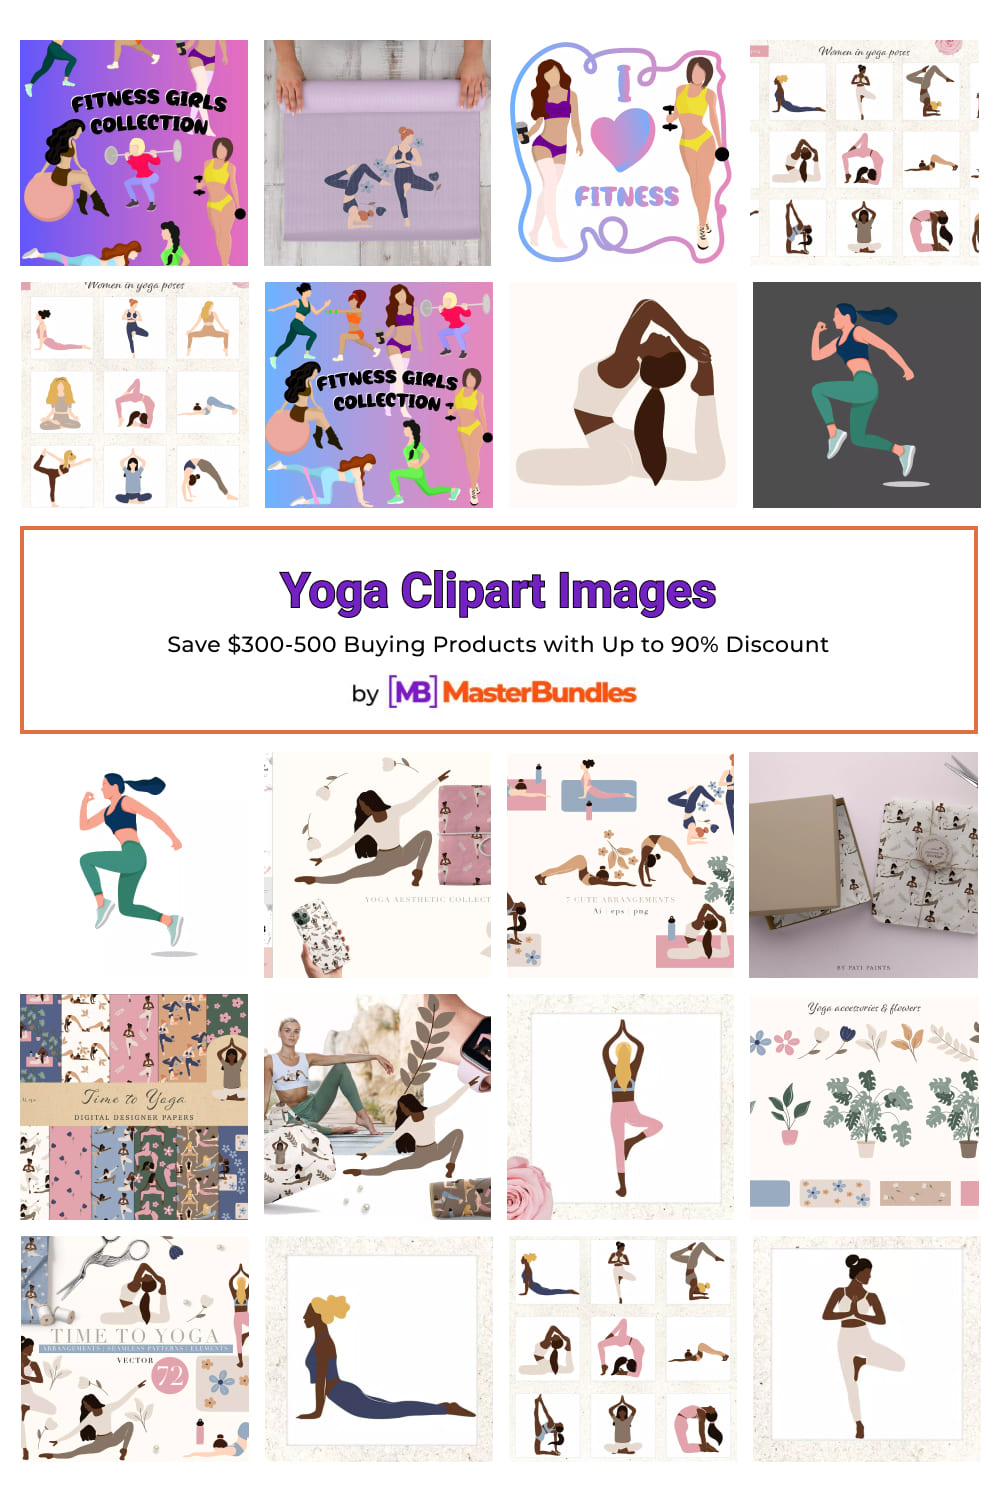 Yoga Clipart Images Pinterest image.